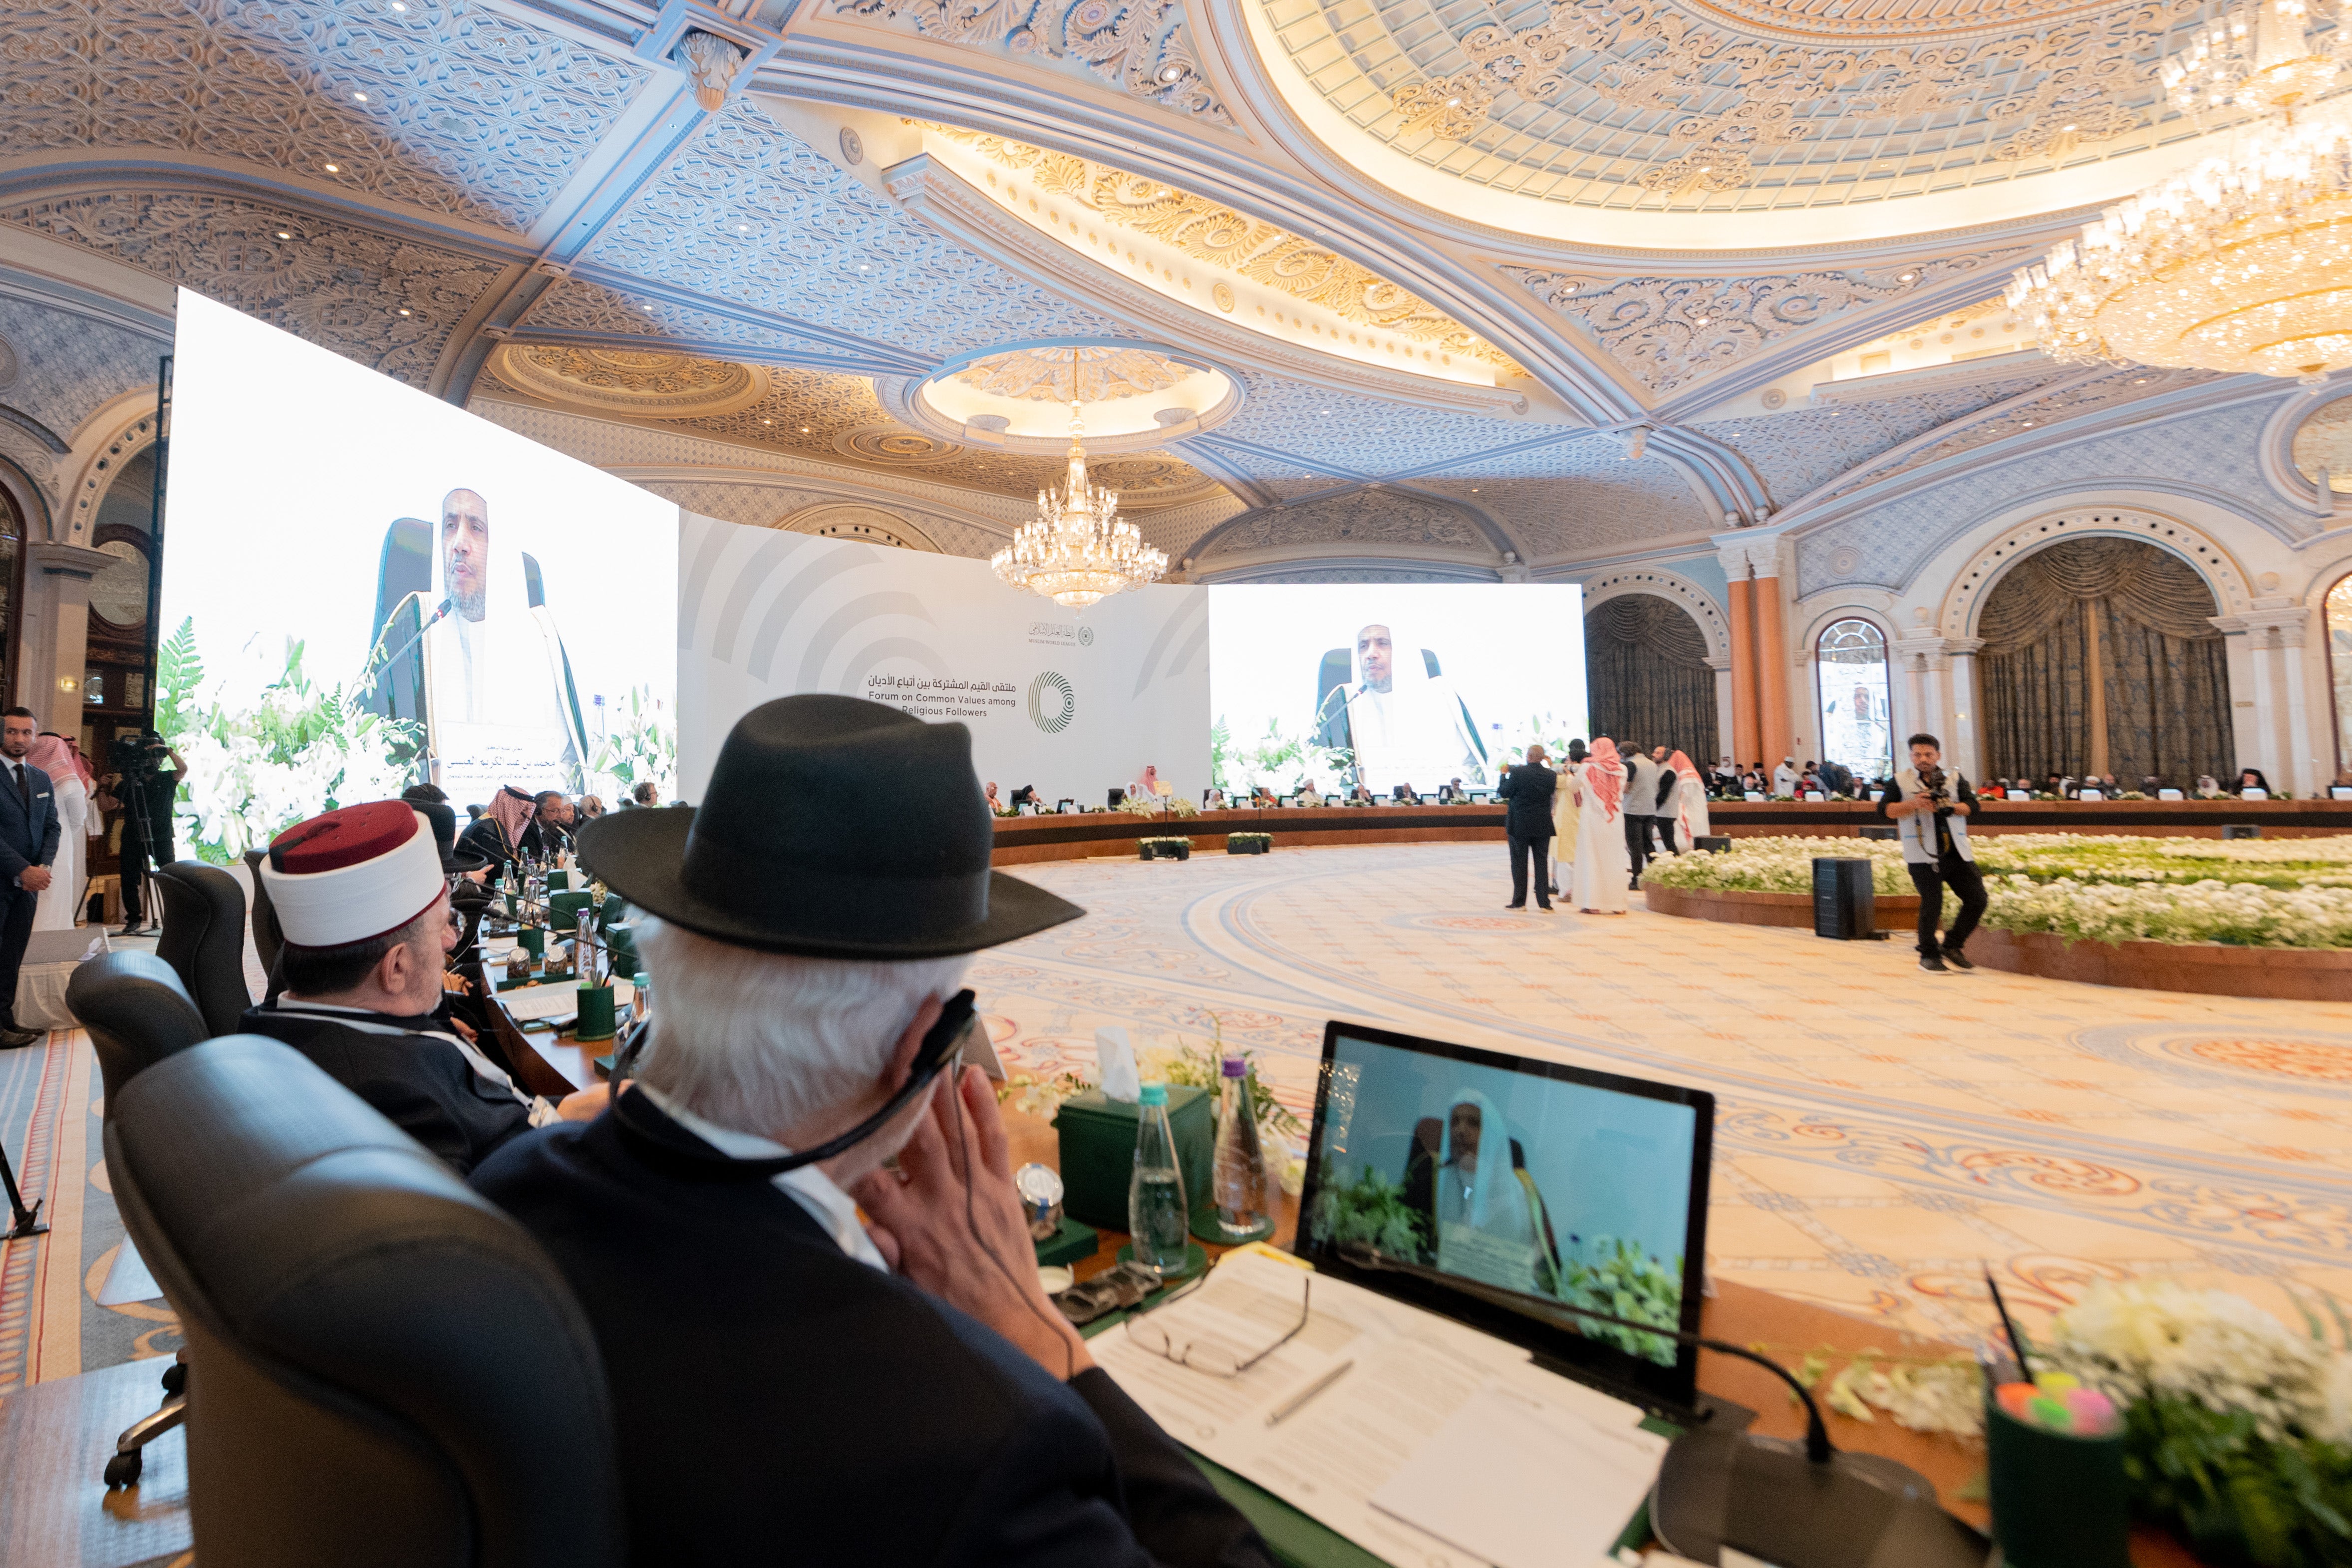 Muslim scholars, bishops, rabbis and Hindu leaders meet in Saudi Arabian religious conference